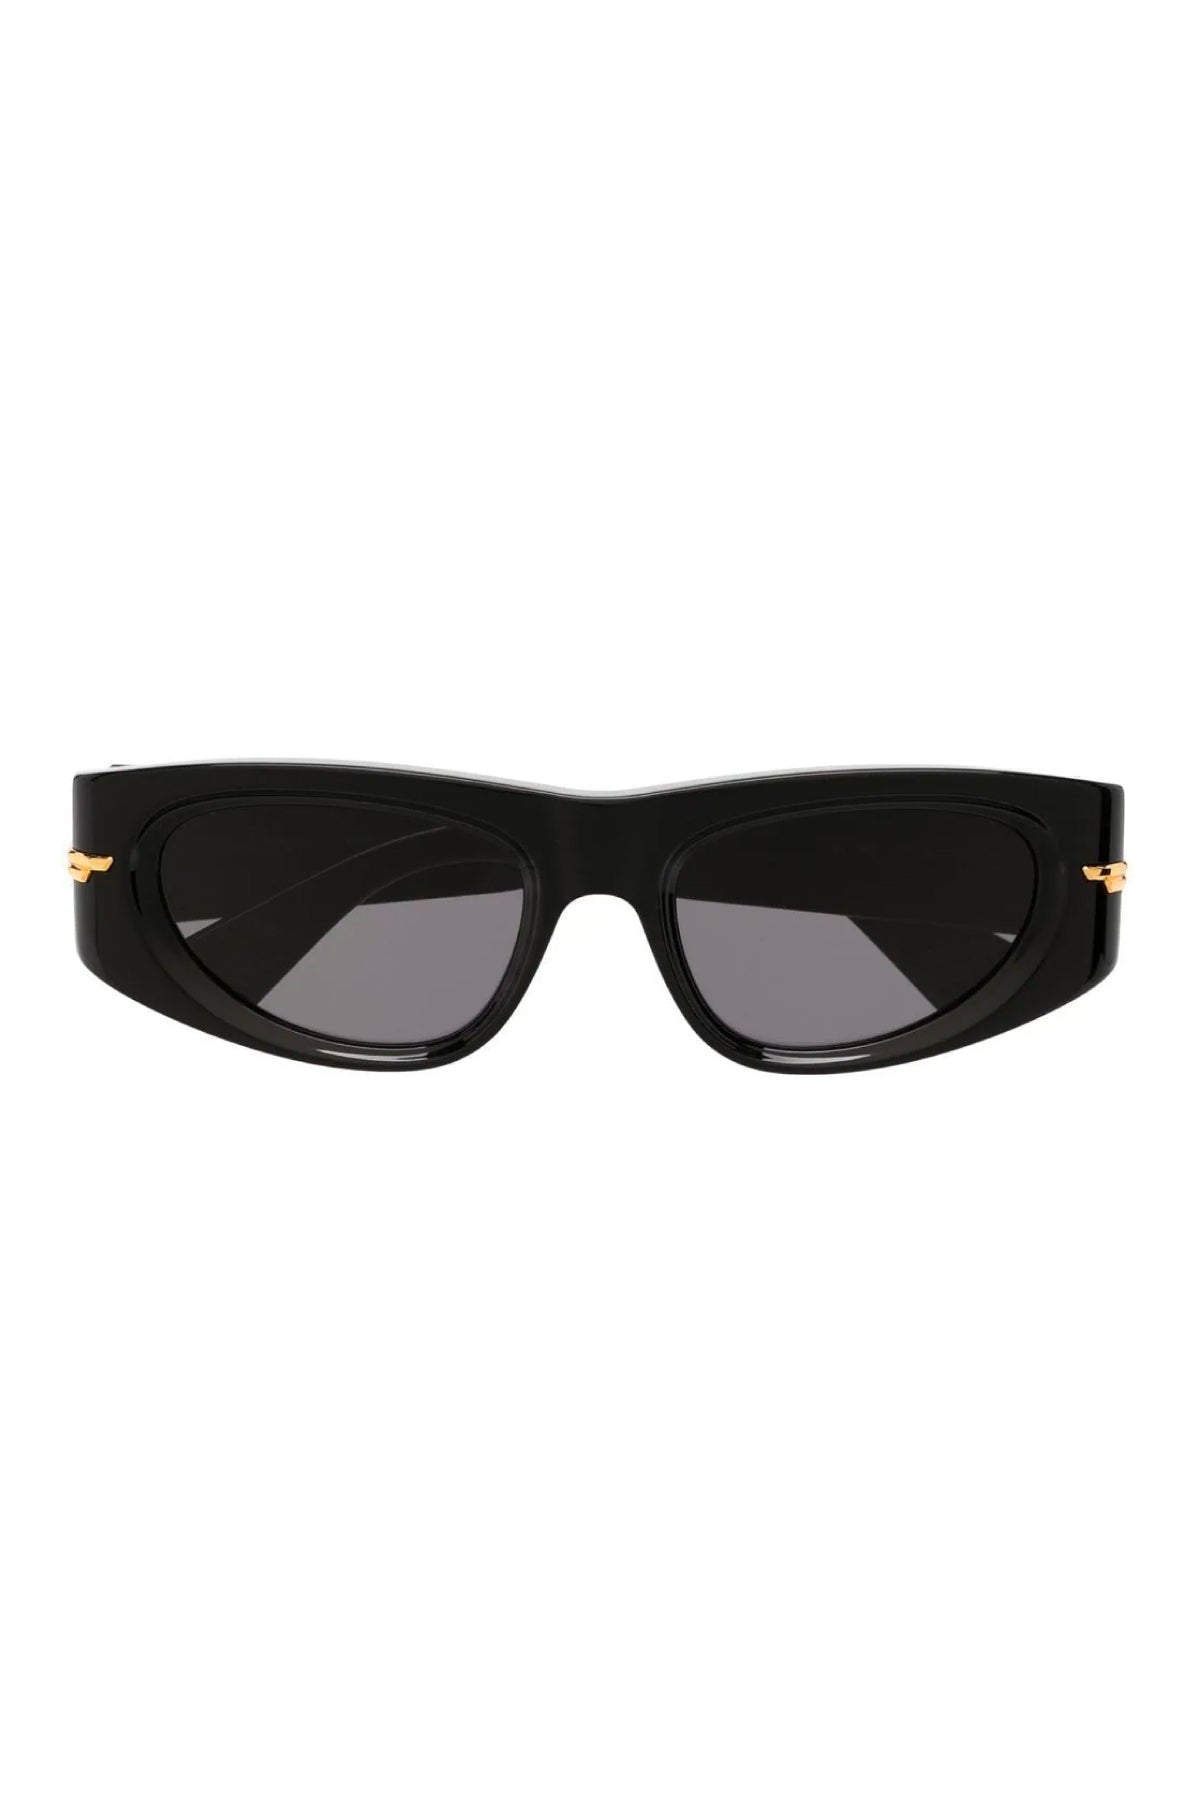 Bottega Veneta Classic Oval Sunglasses - Black